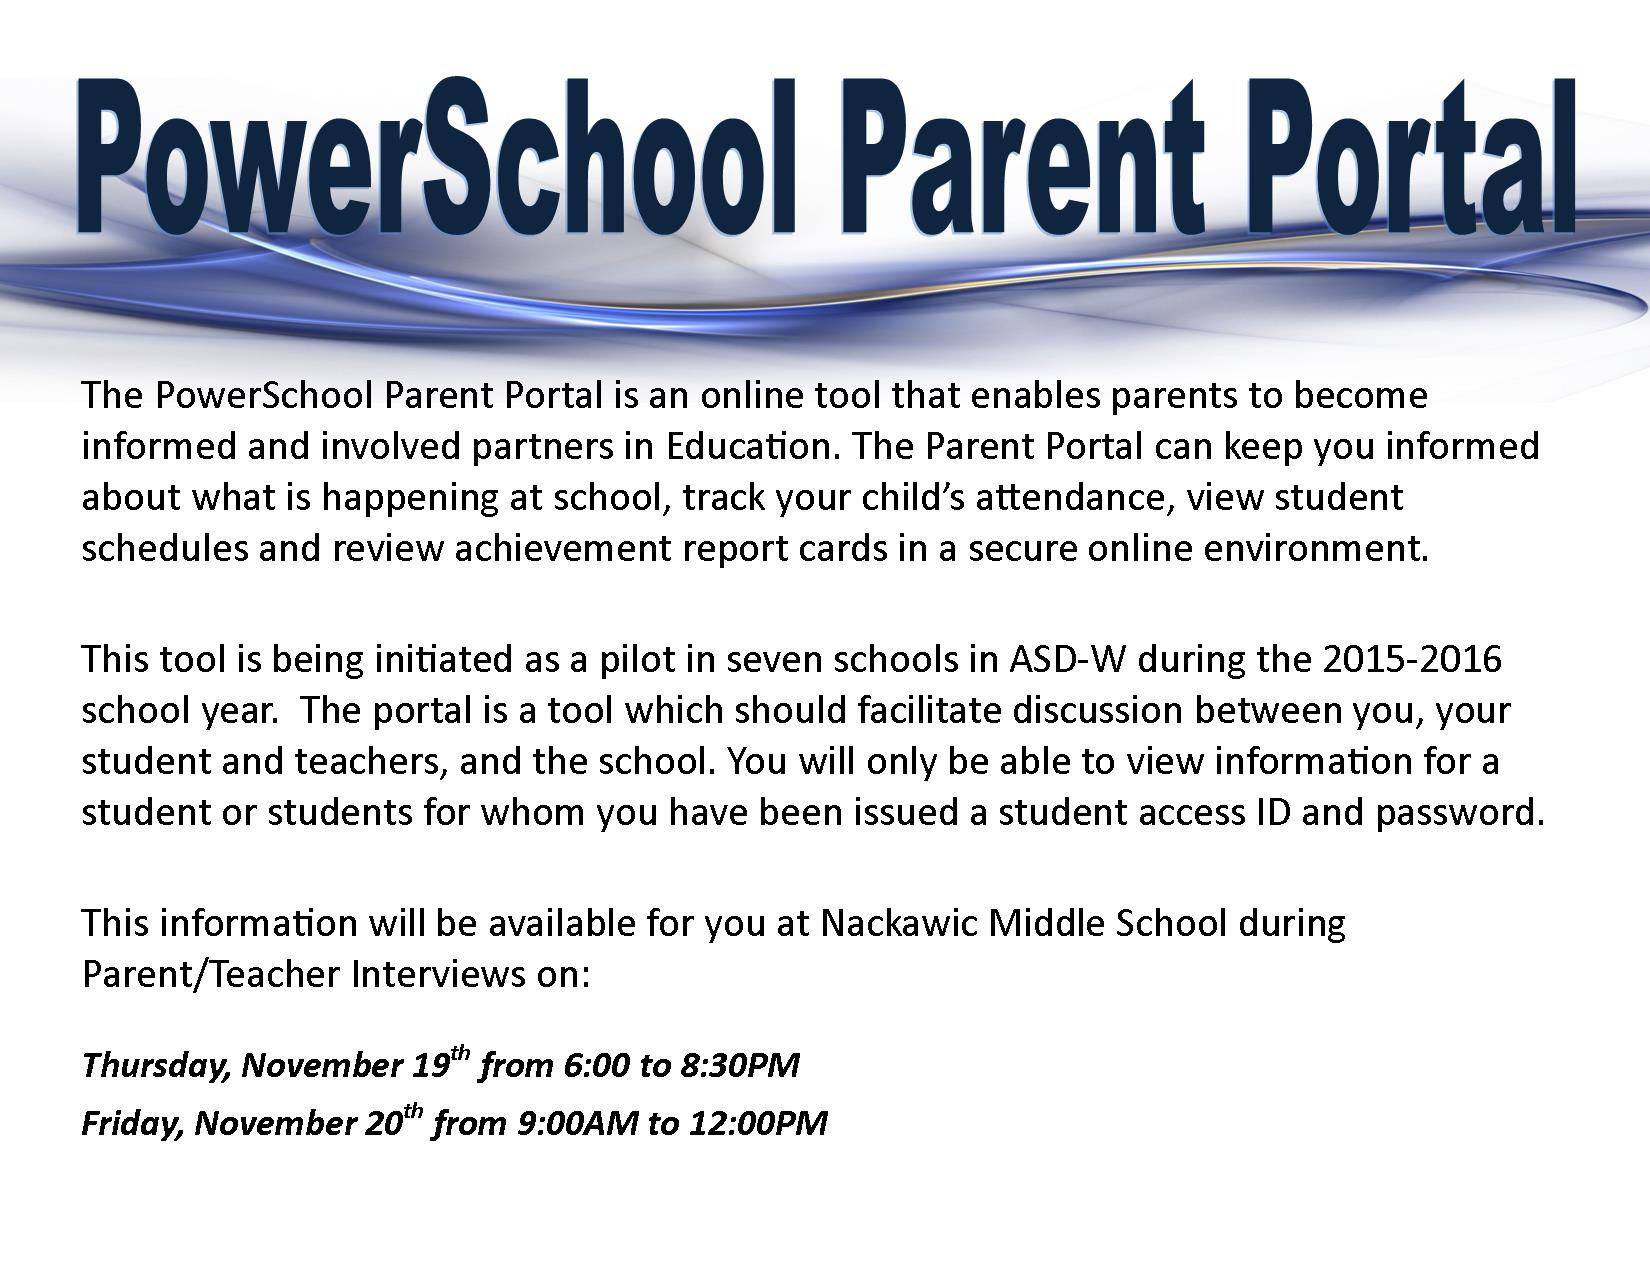 powerSchool Parent Portal.jpg